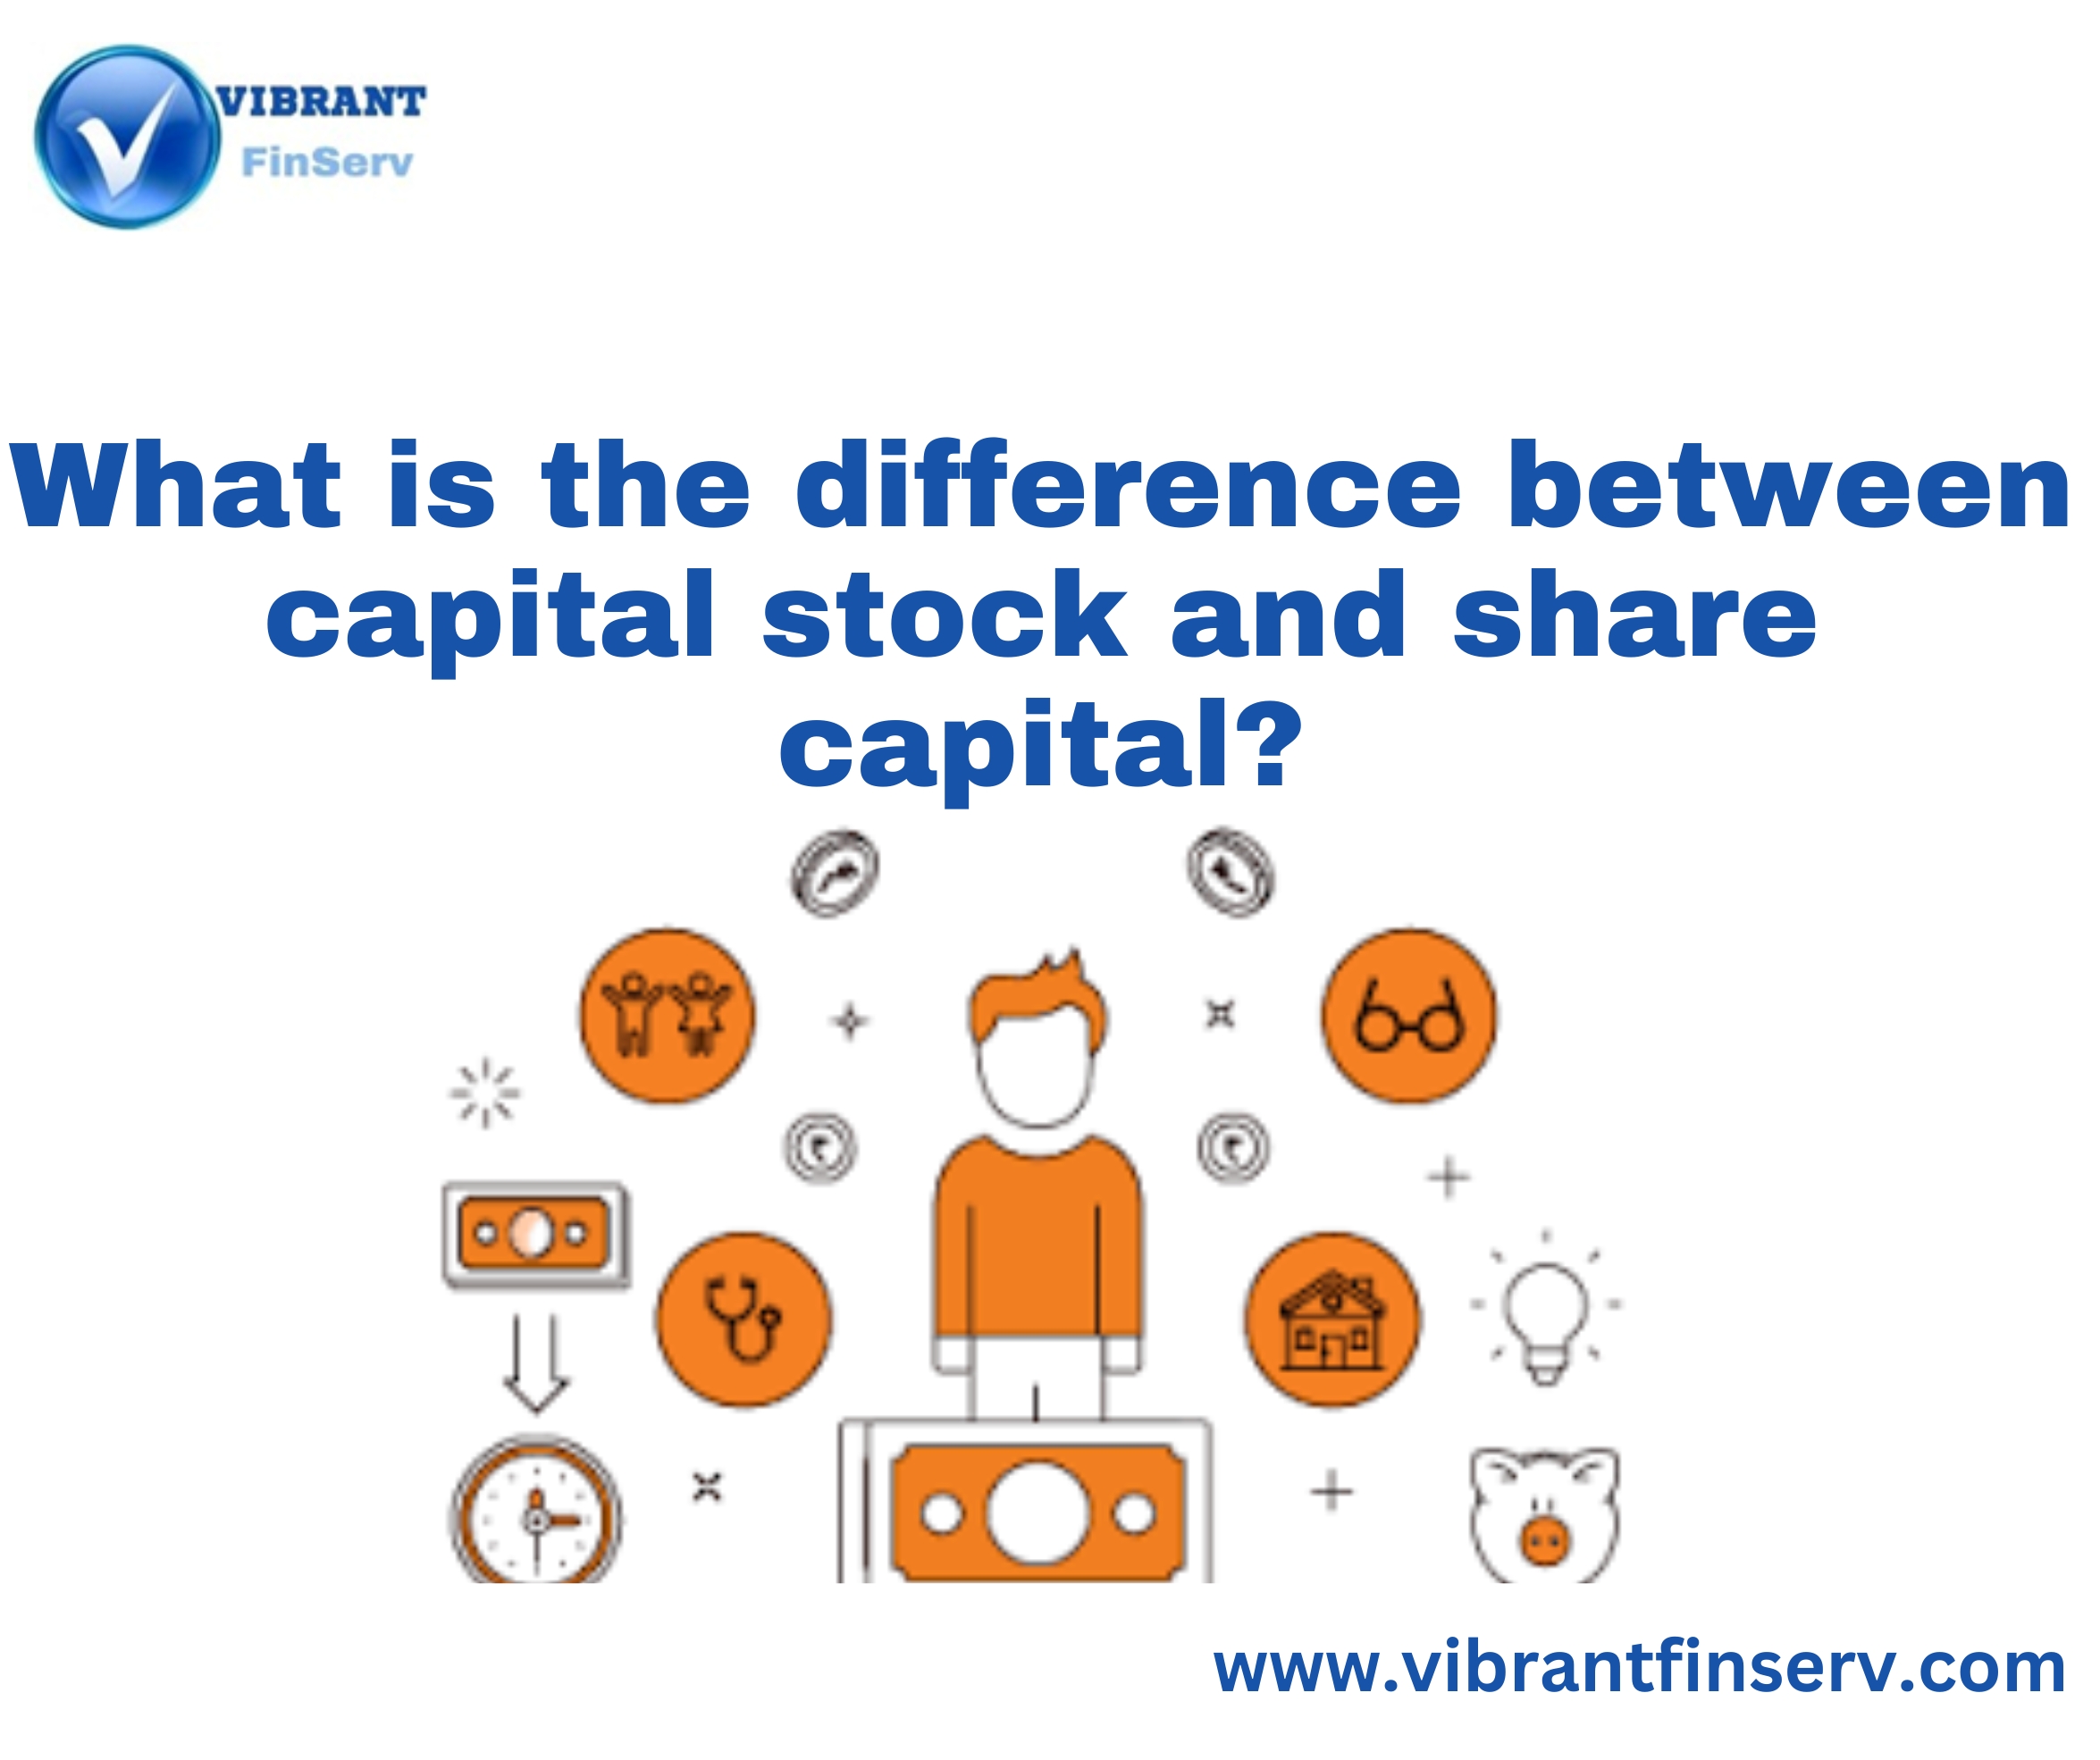 Capital Stock and Share Capital